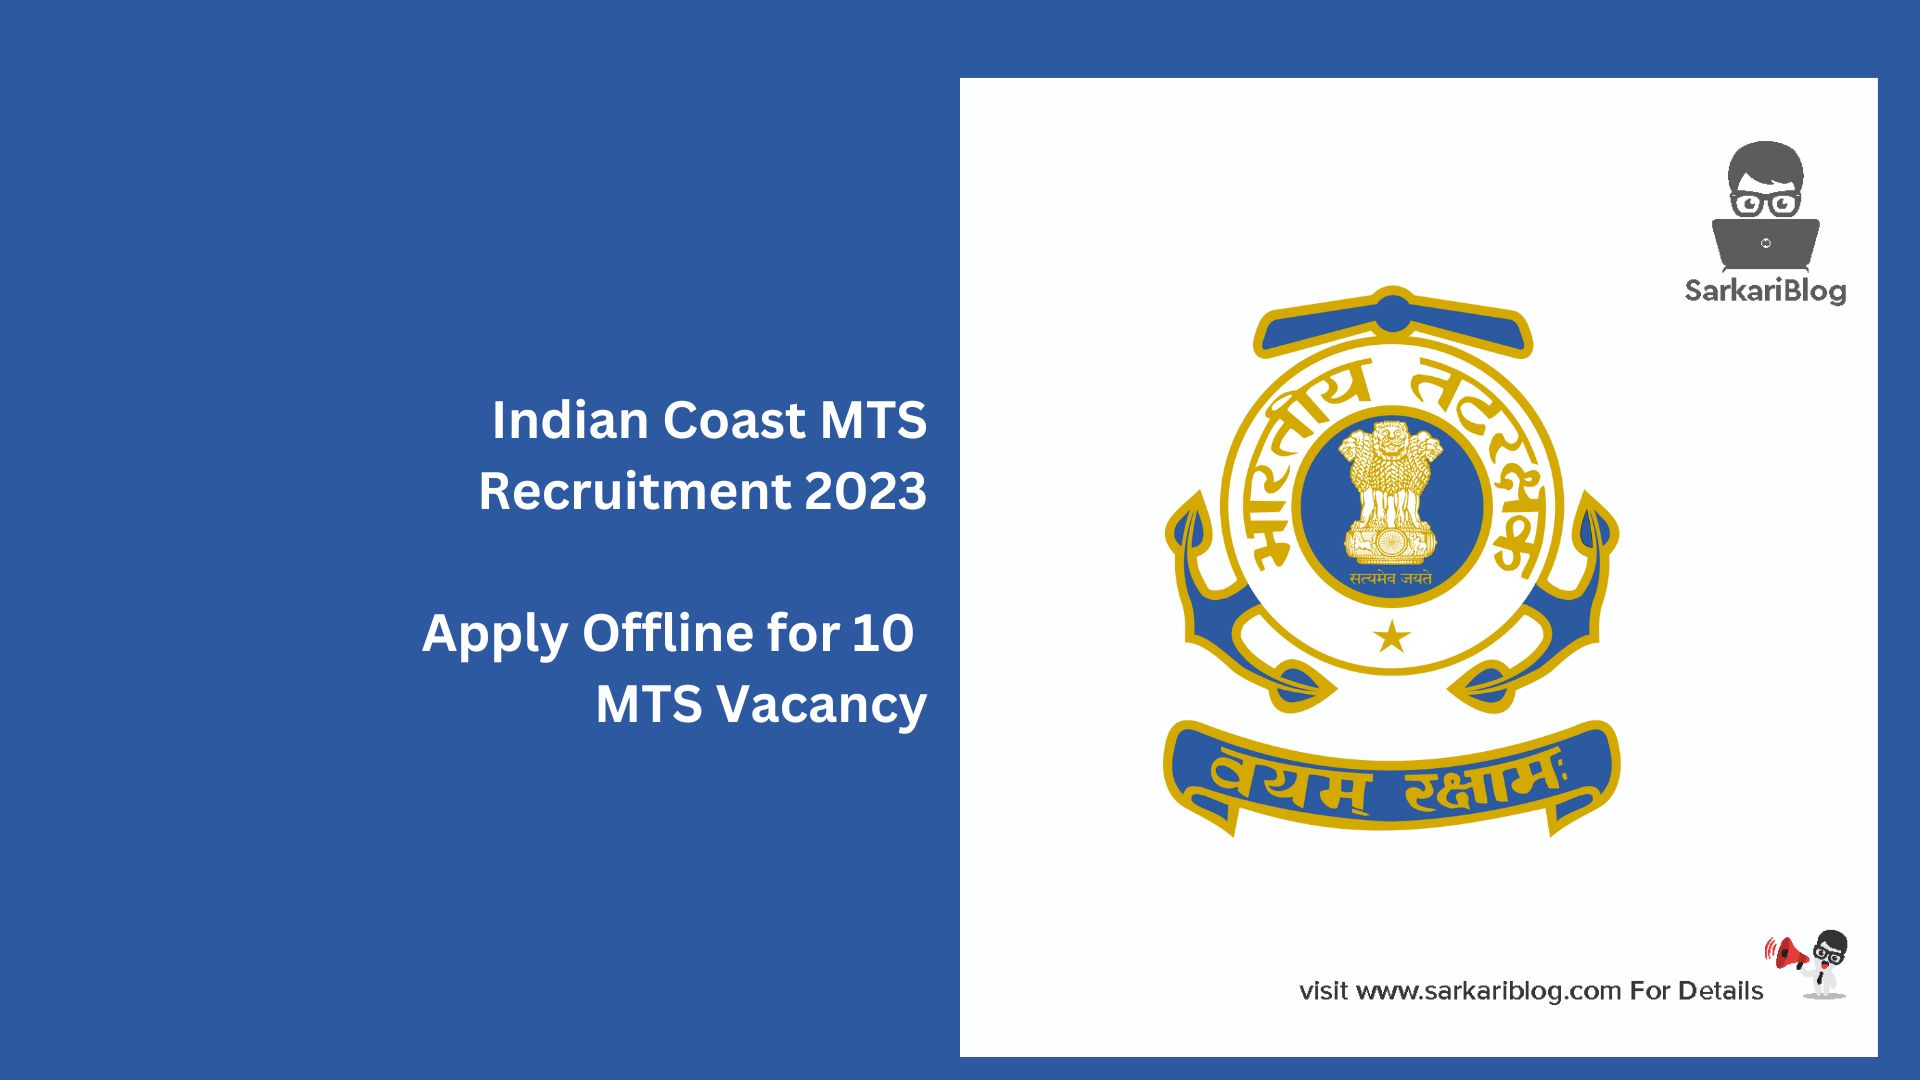 Indian Coast MTS Recruitment 2023